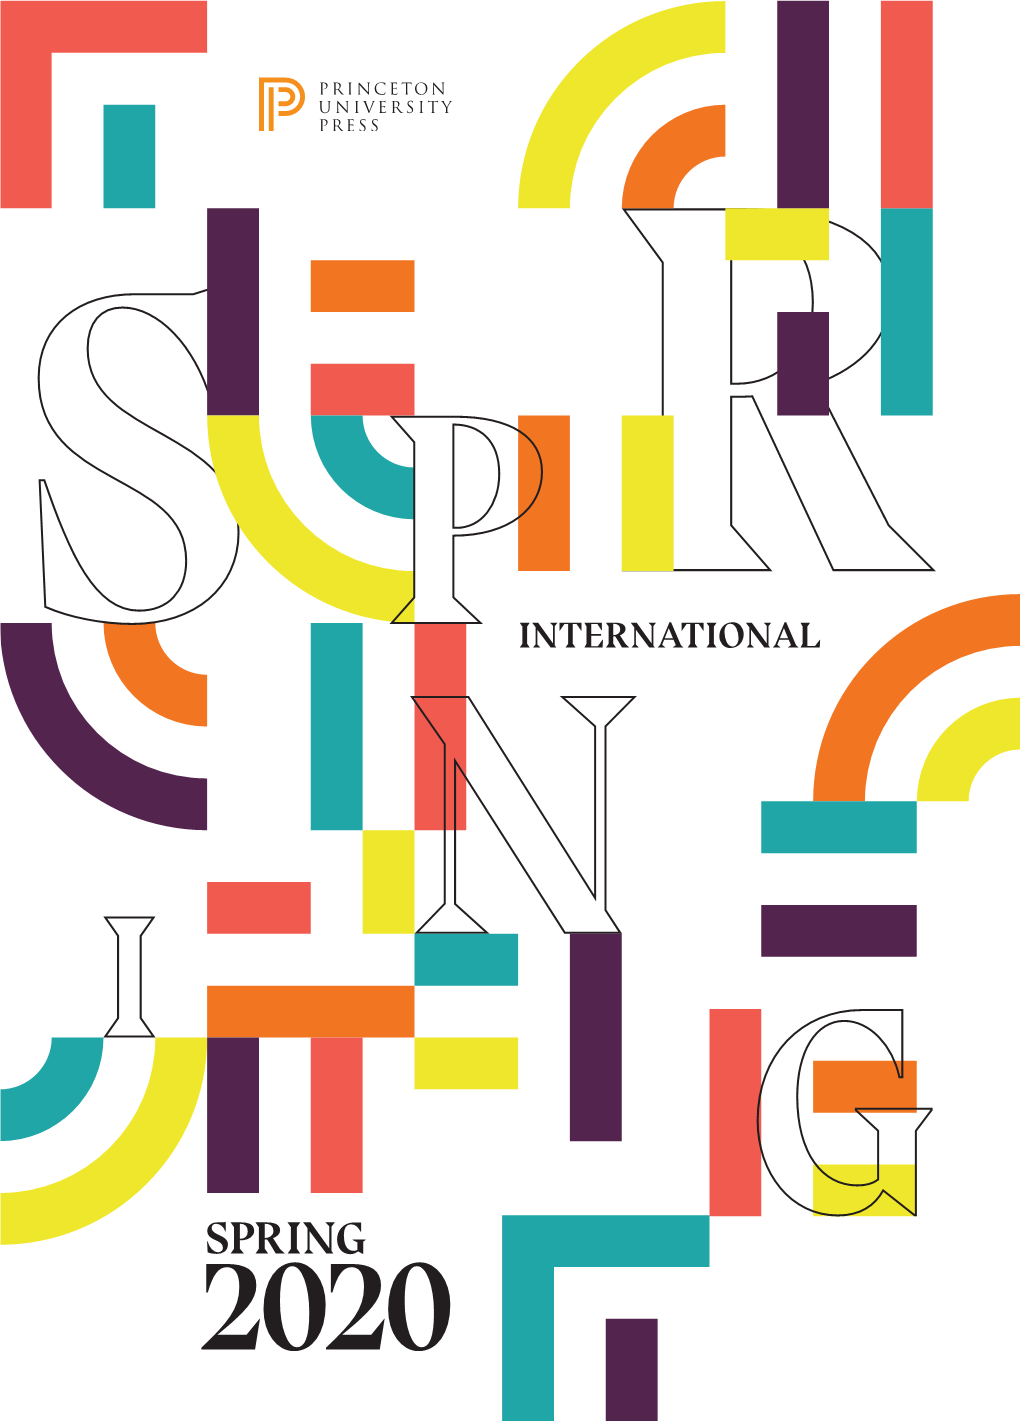 Princeton University Press Spring 2020 International Catalog